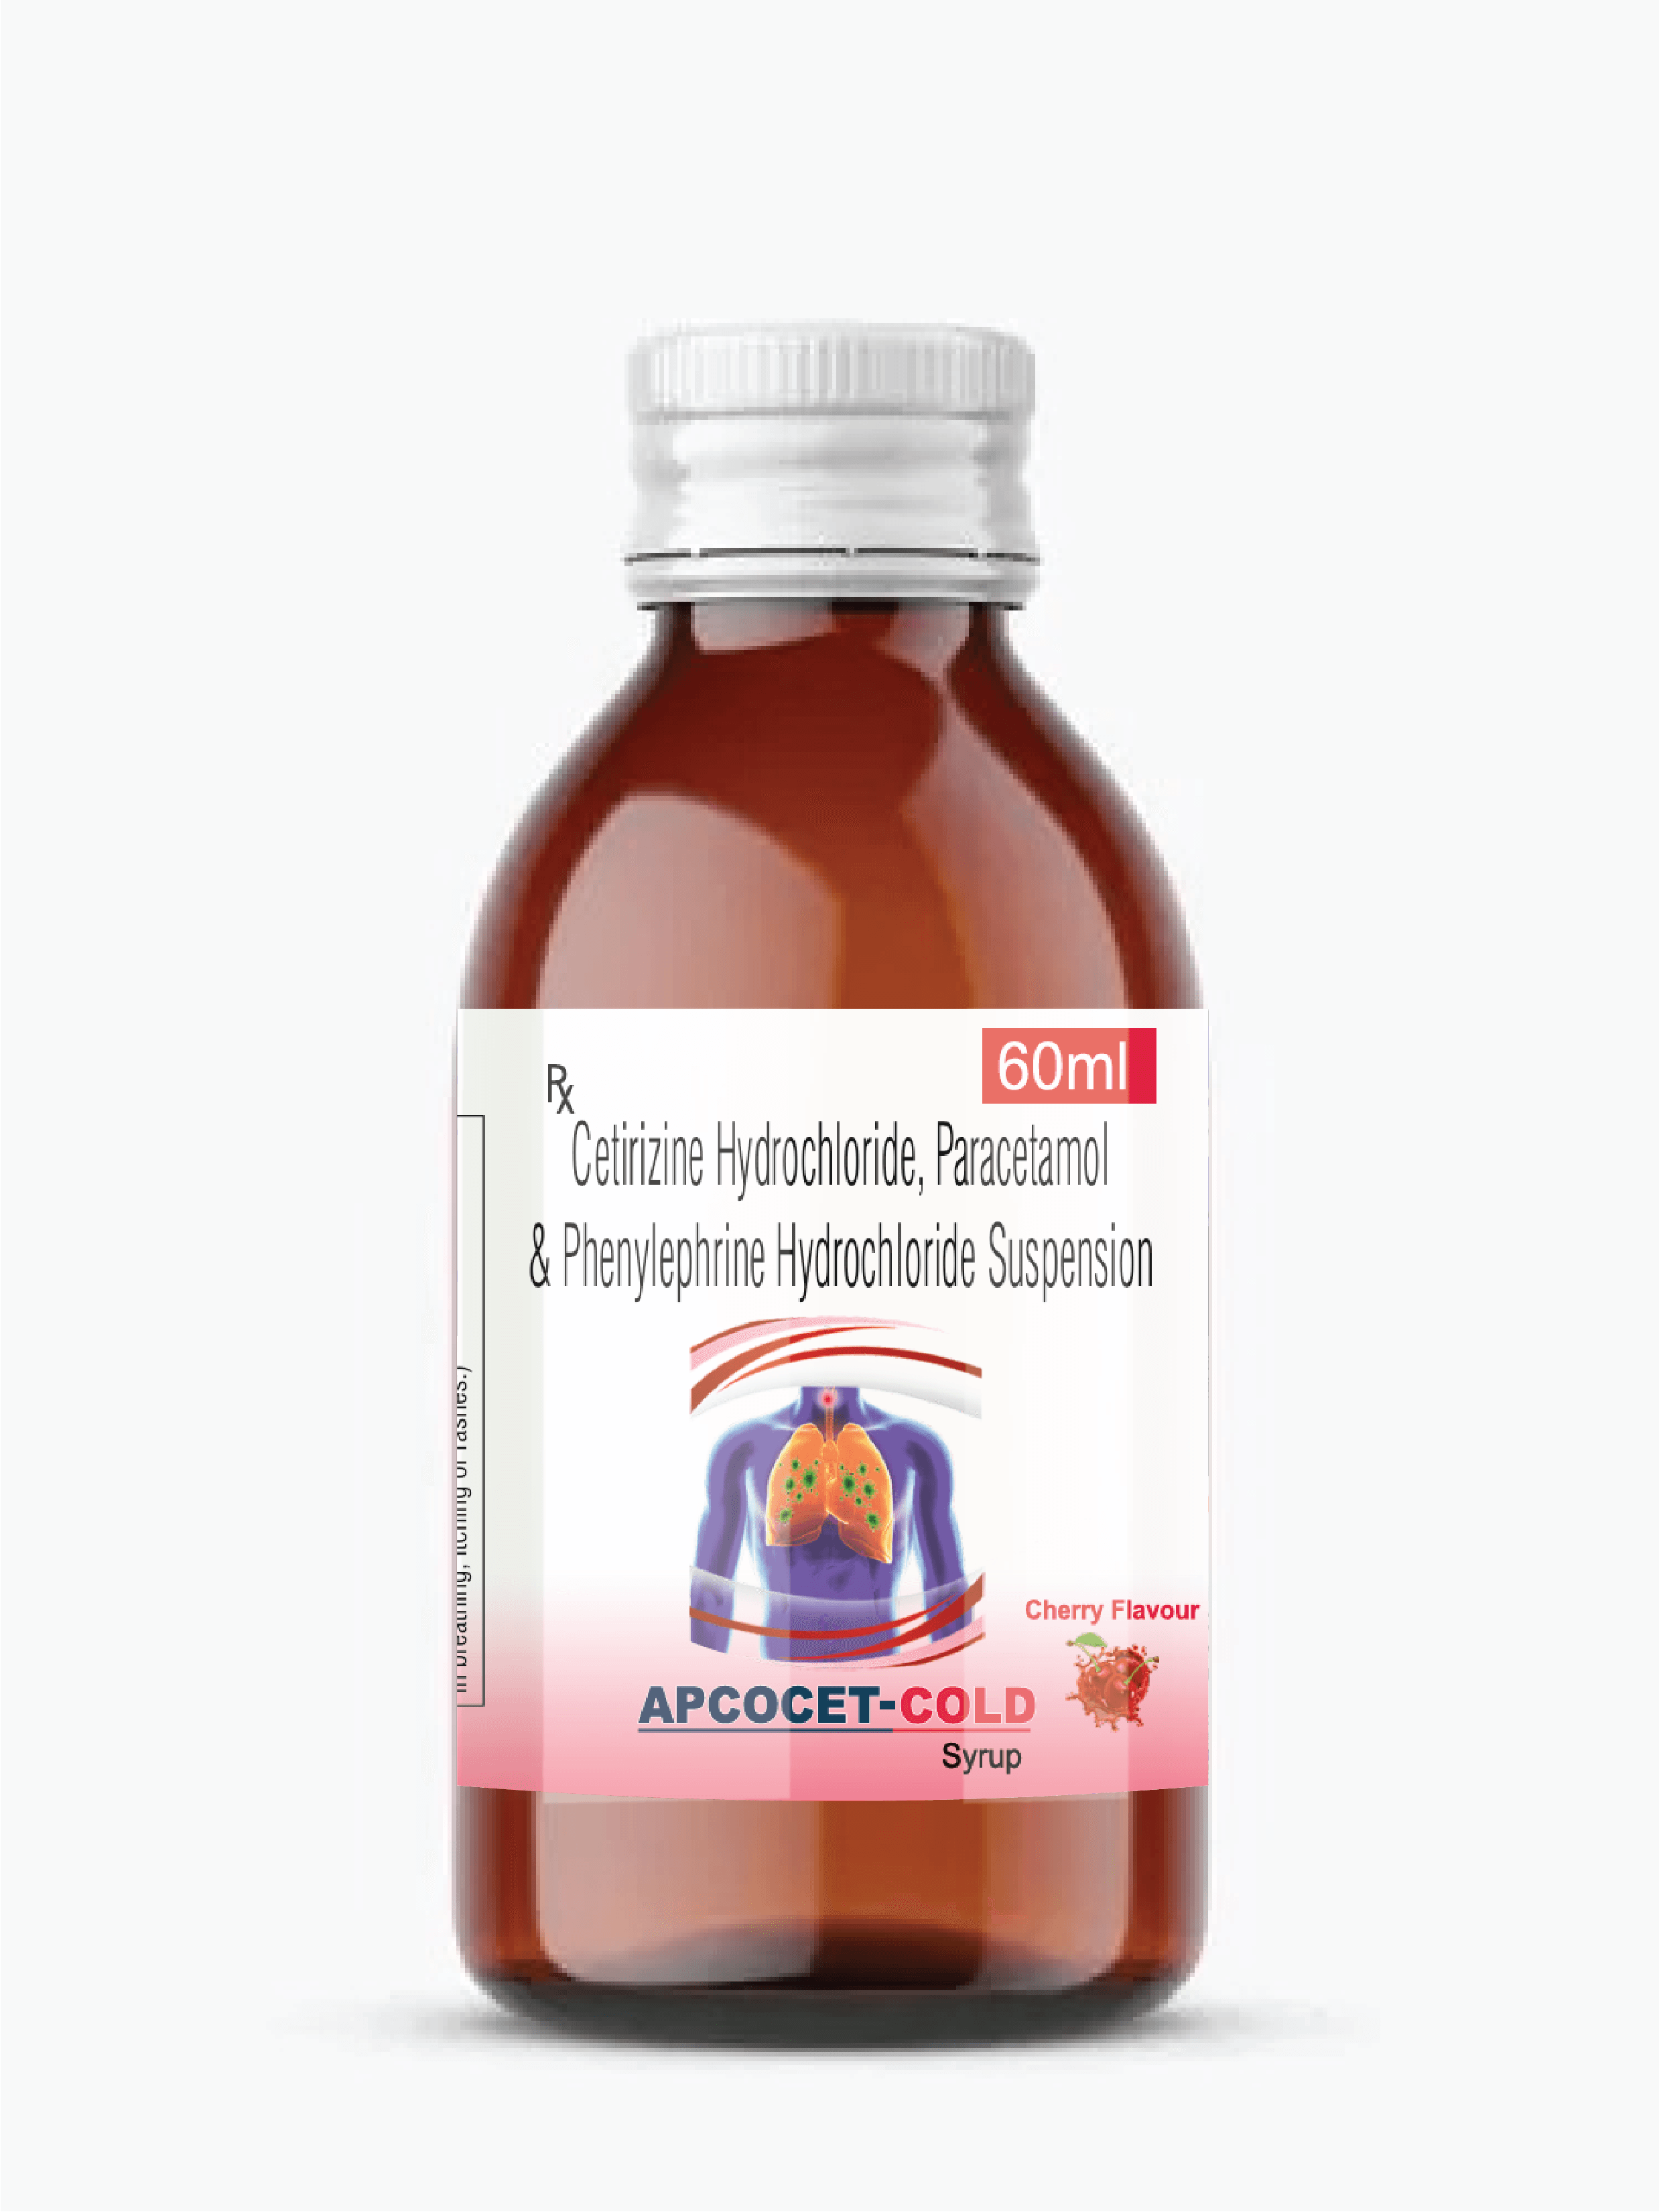 Apcocet-cold (syrup)